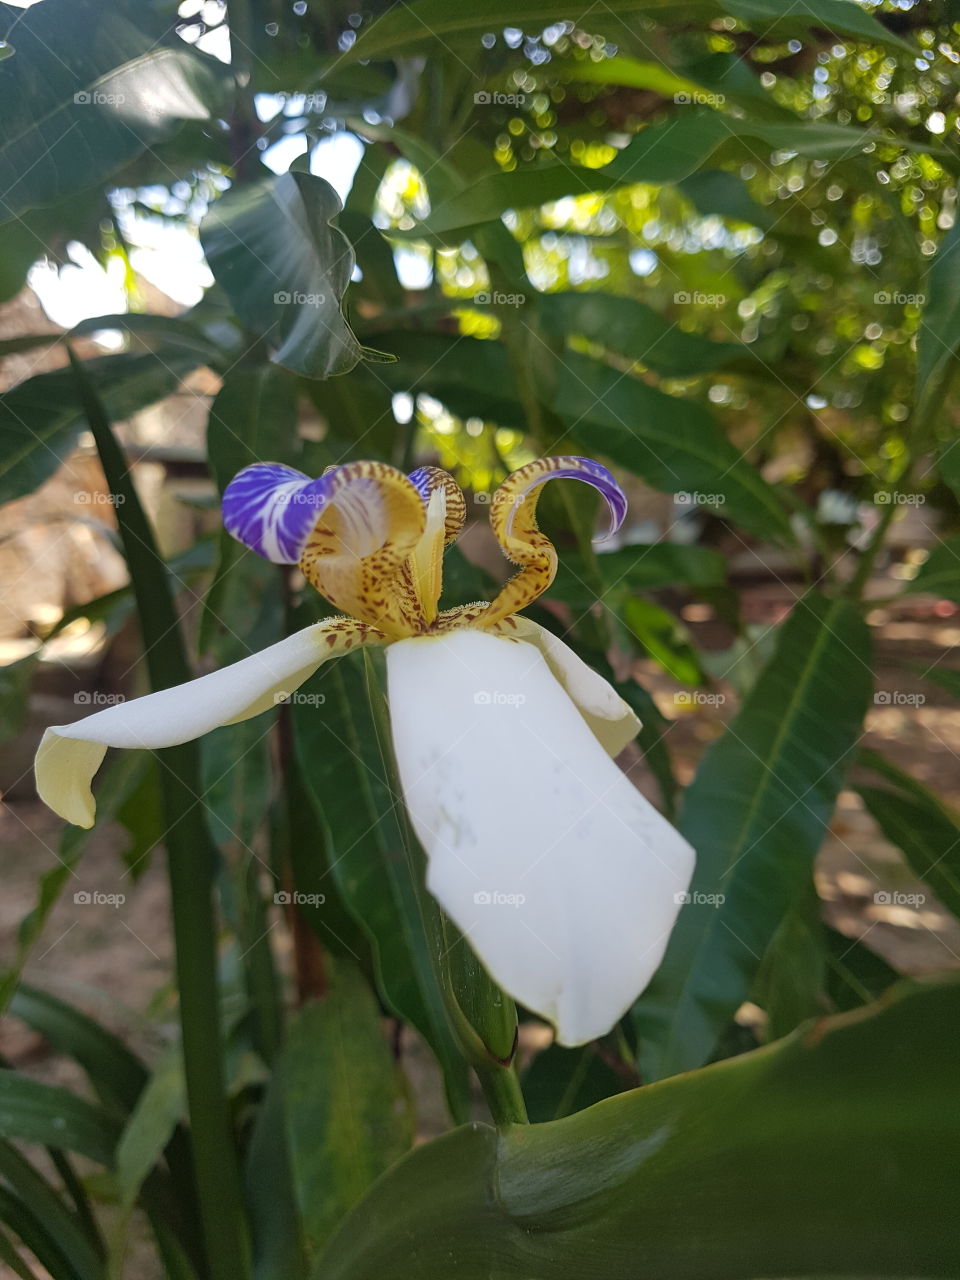 Felicidade é orquídeas no Jardim.